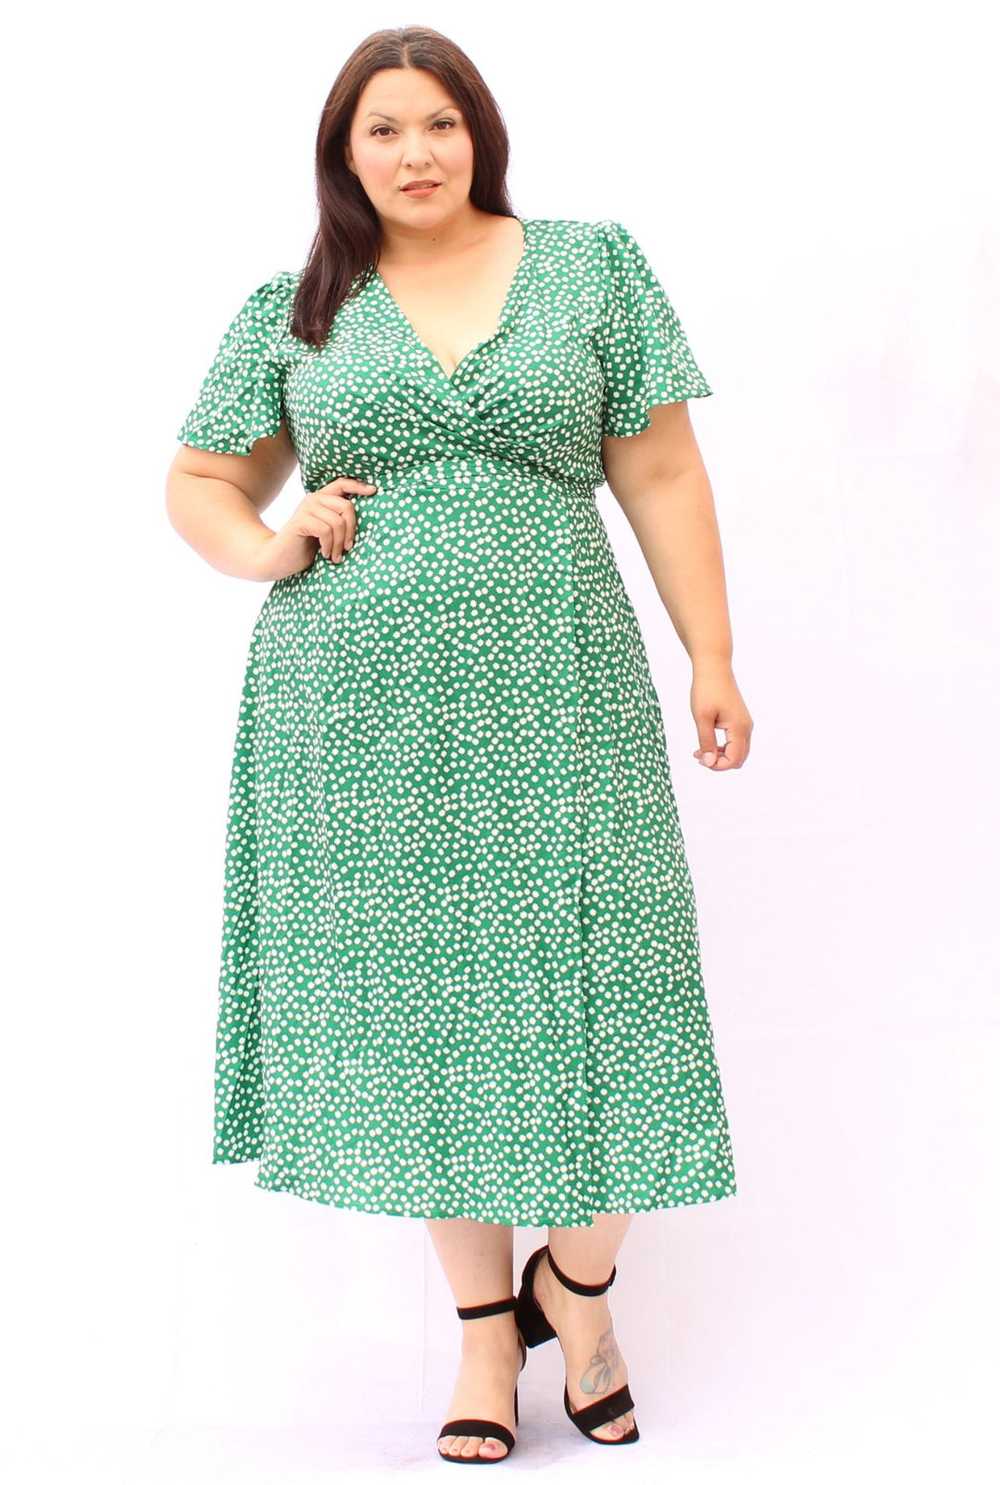 Bloomchic Green Midi Flower Wrap Dress 18, 20, 22 - image 1